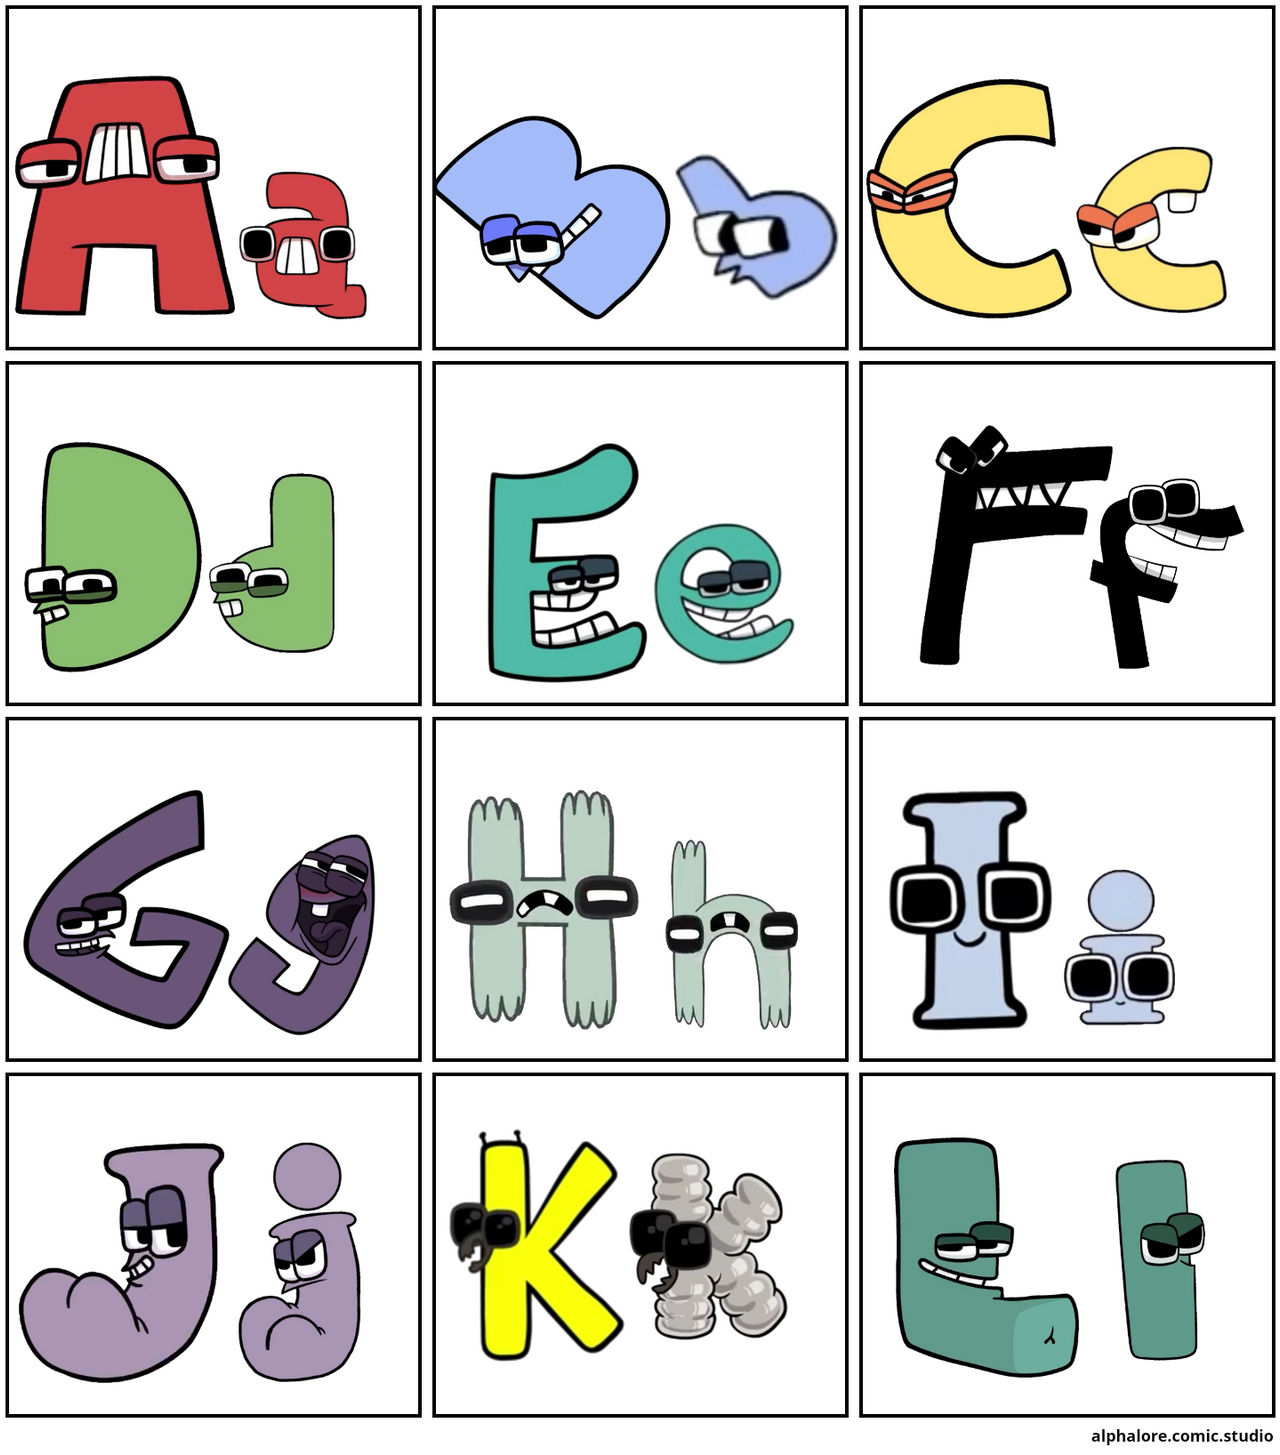 Lowercase Alphabet Lore (b) - Comic Studio